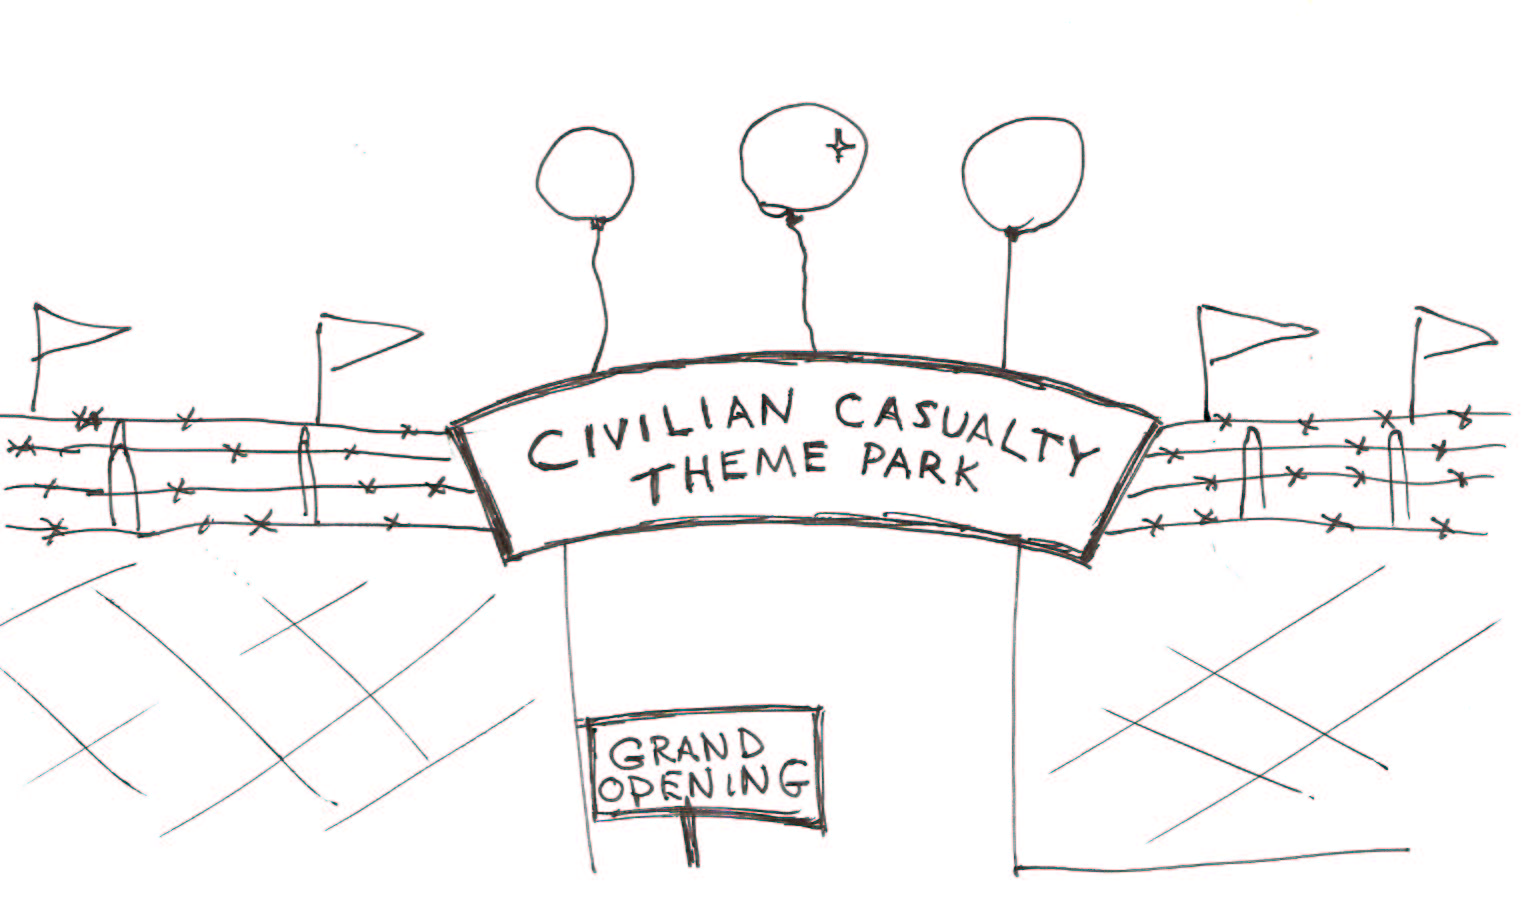 civilian casualty theme park drawing.jpg